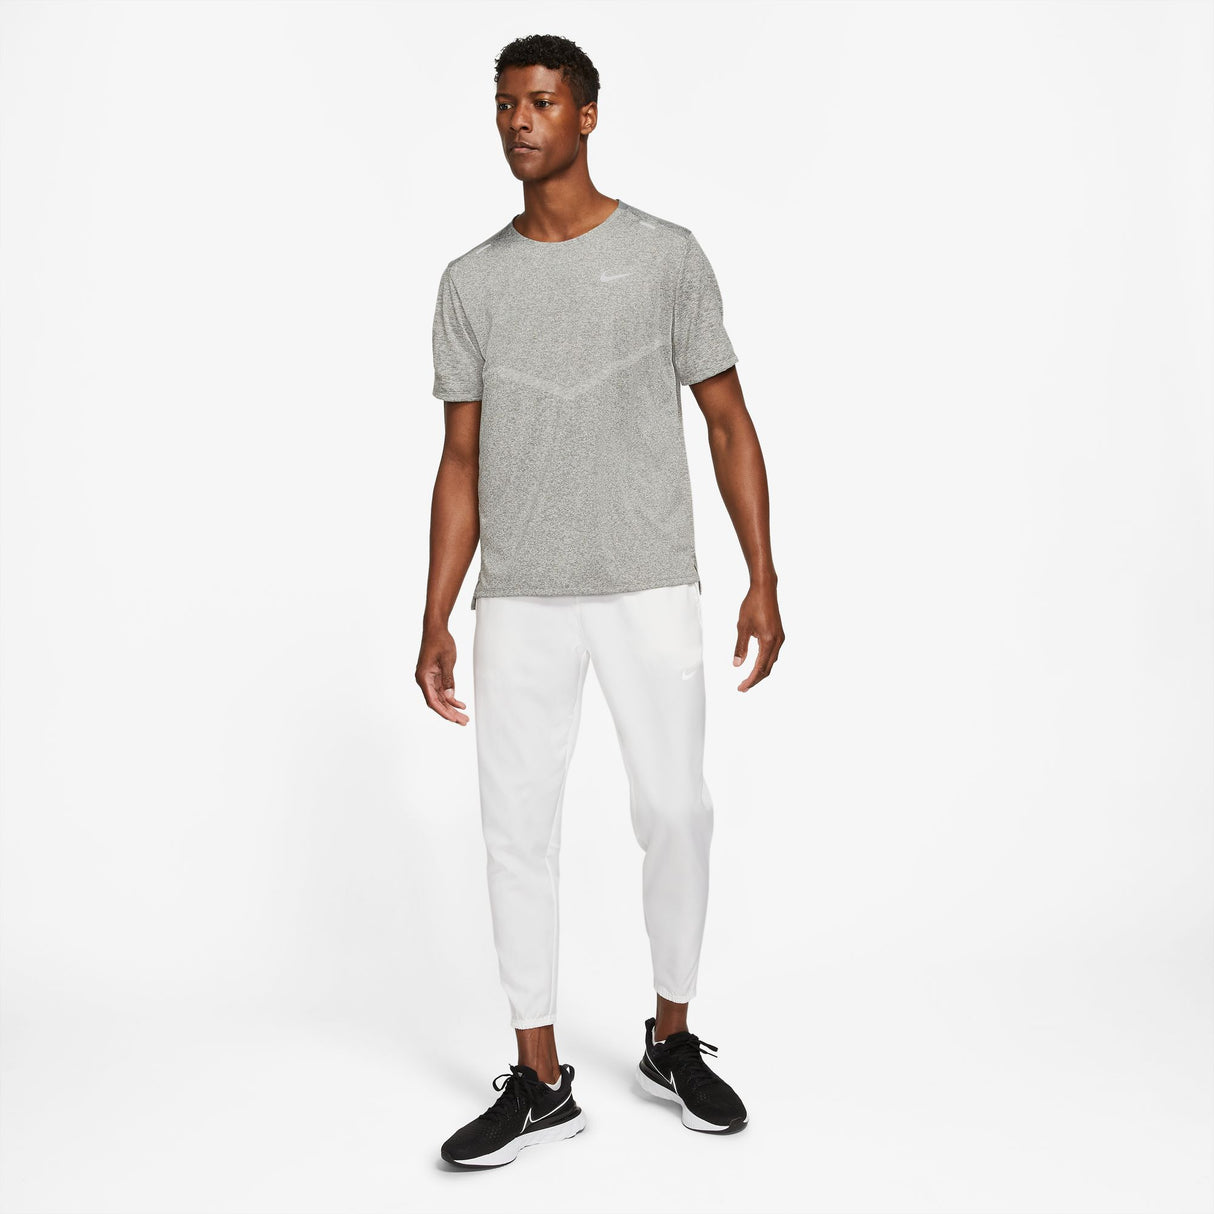 Nike Men's Rise 365 Dri-FIT Short-Sleeve Running Top